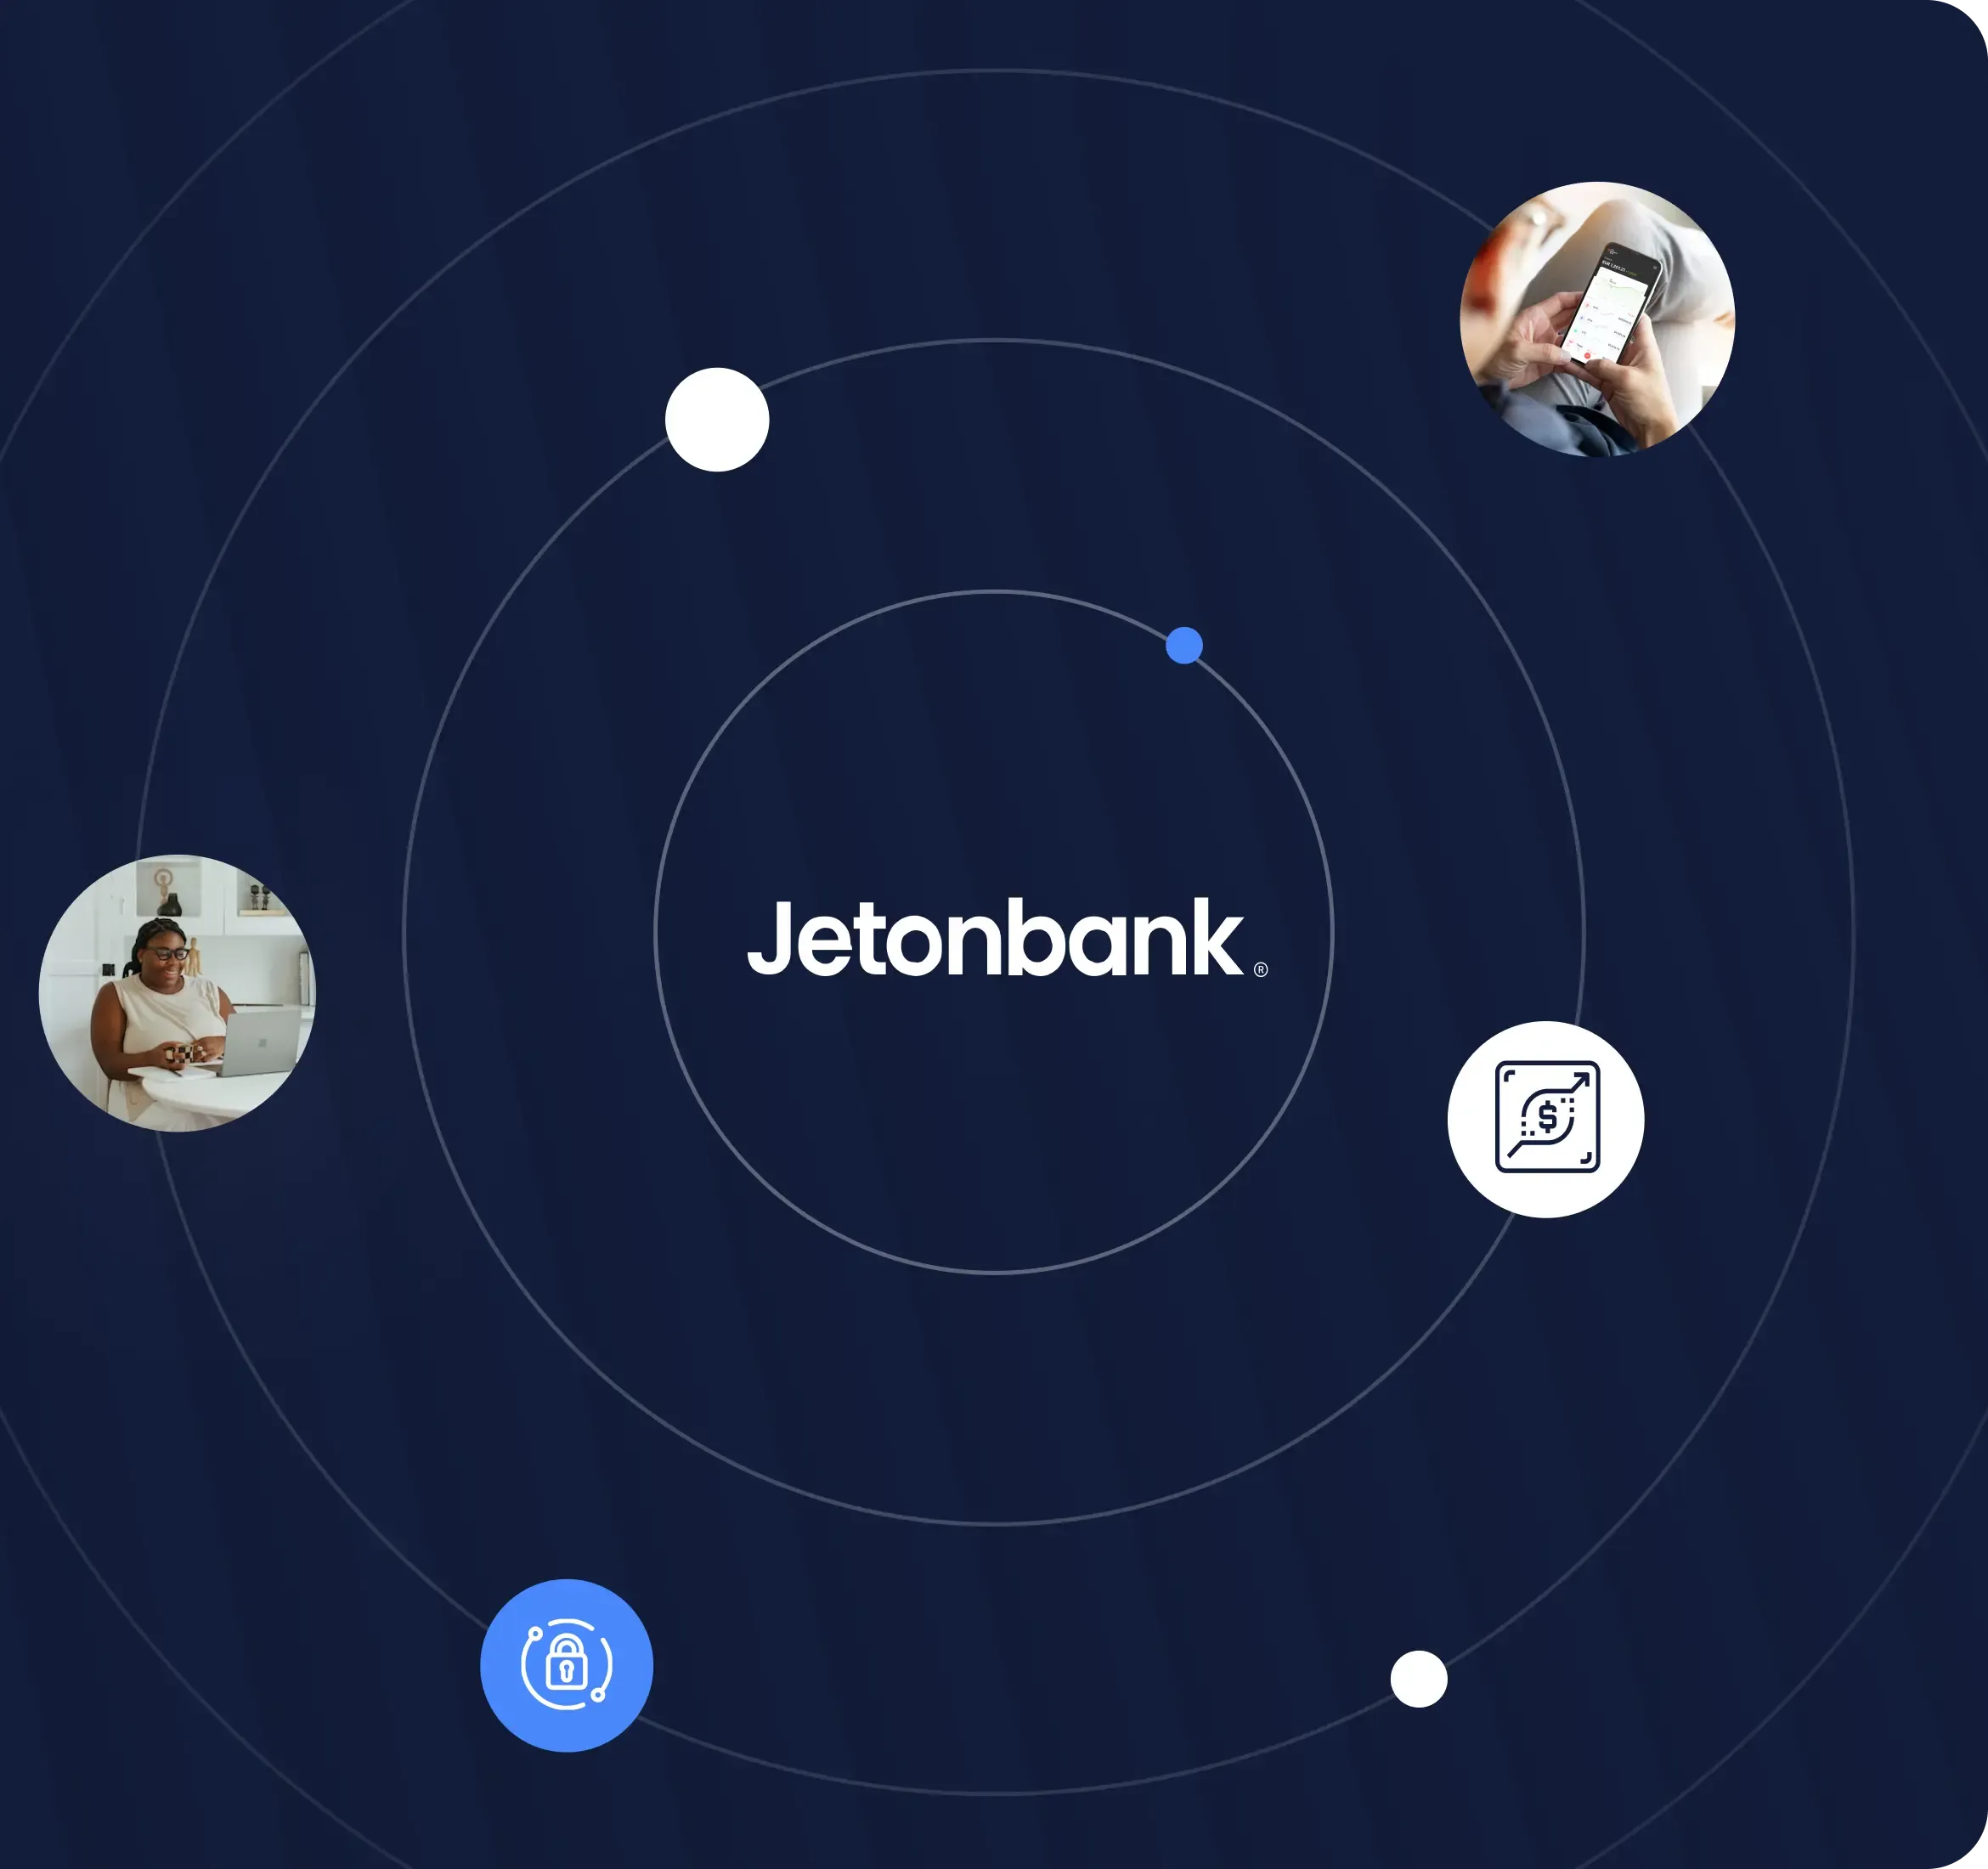 Why Choose JetonBank?